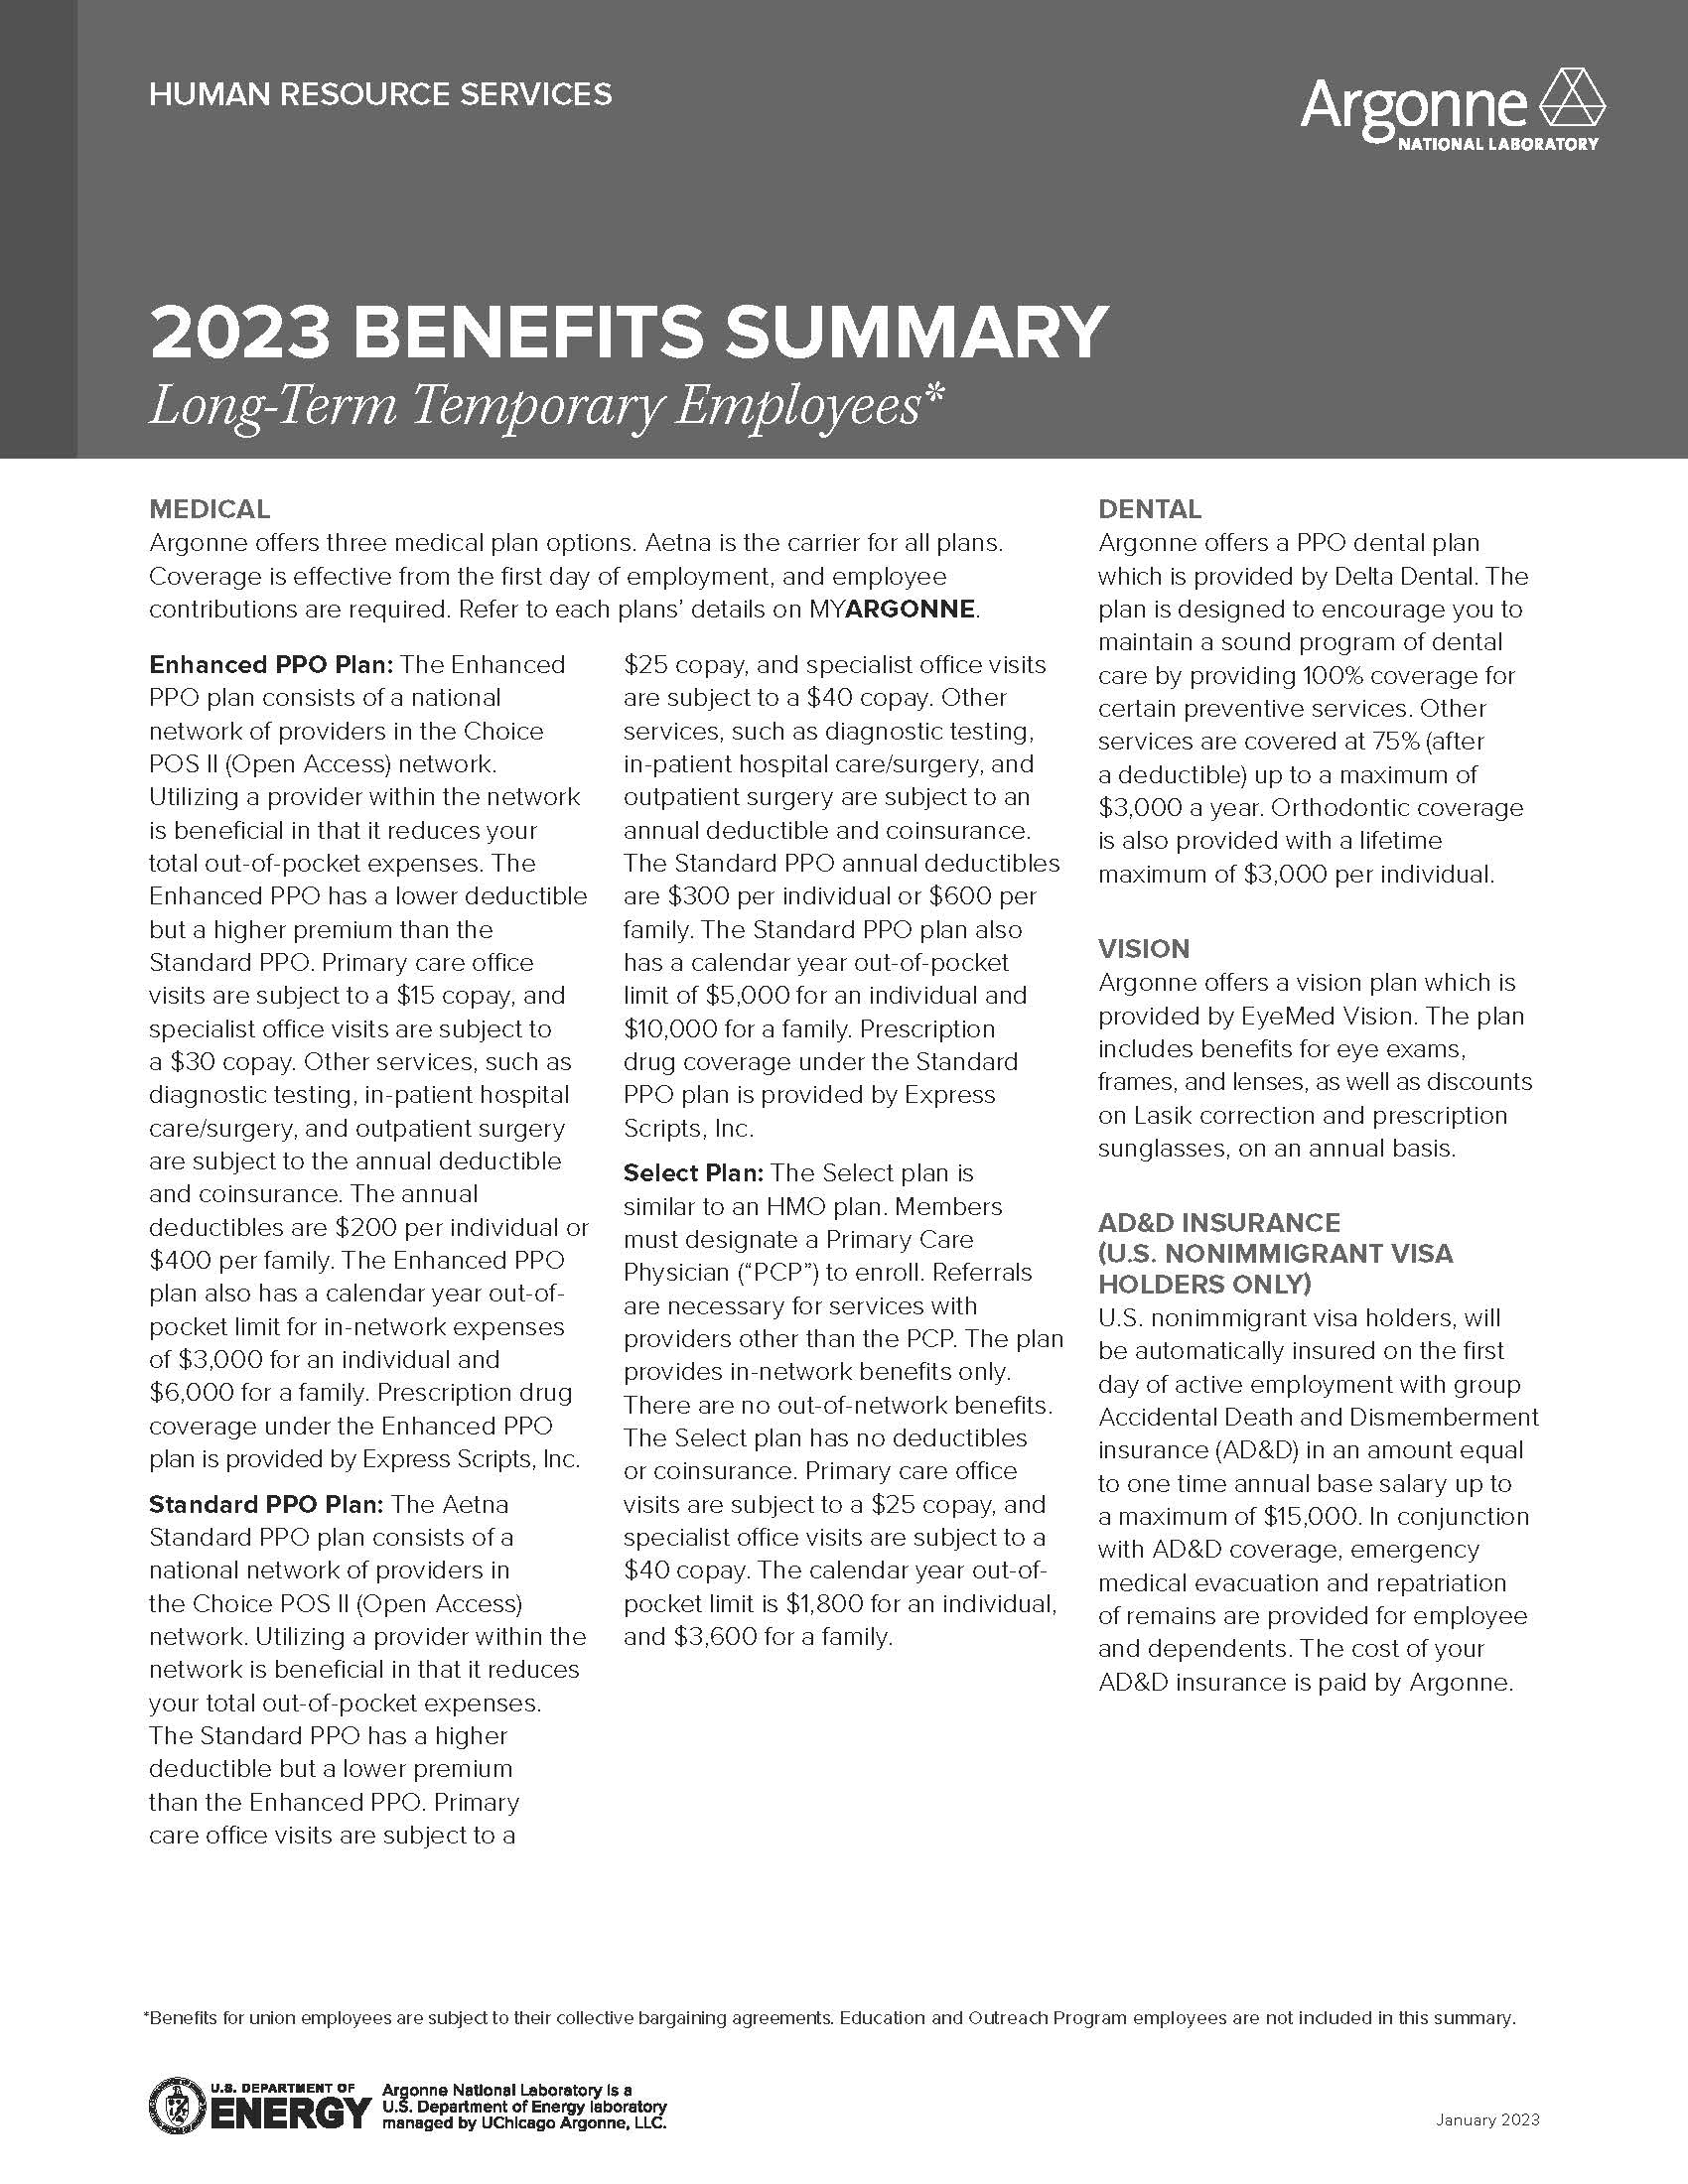 Text of Long-Term Employee Benefits Summary